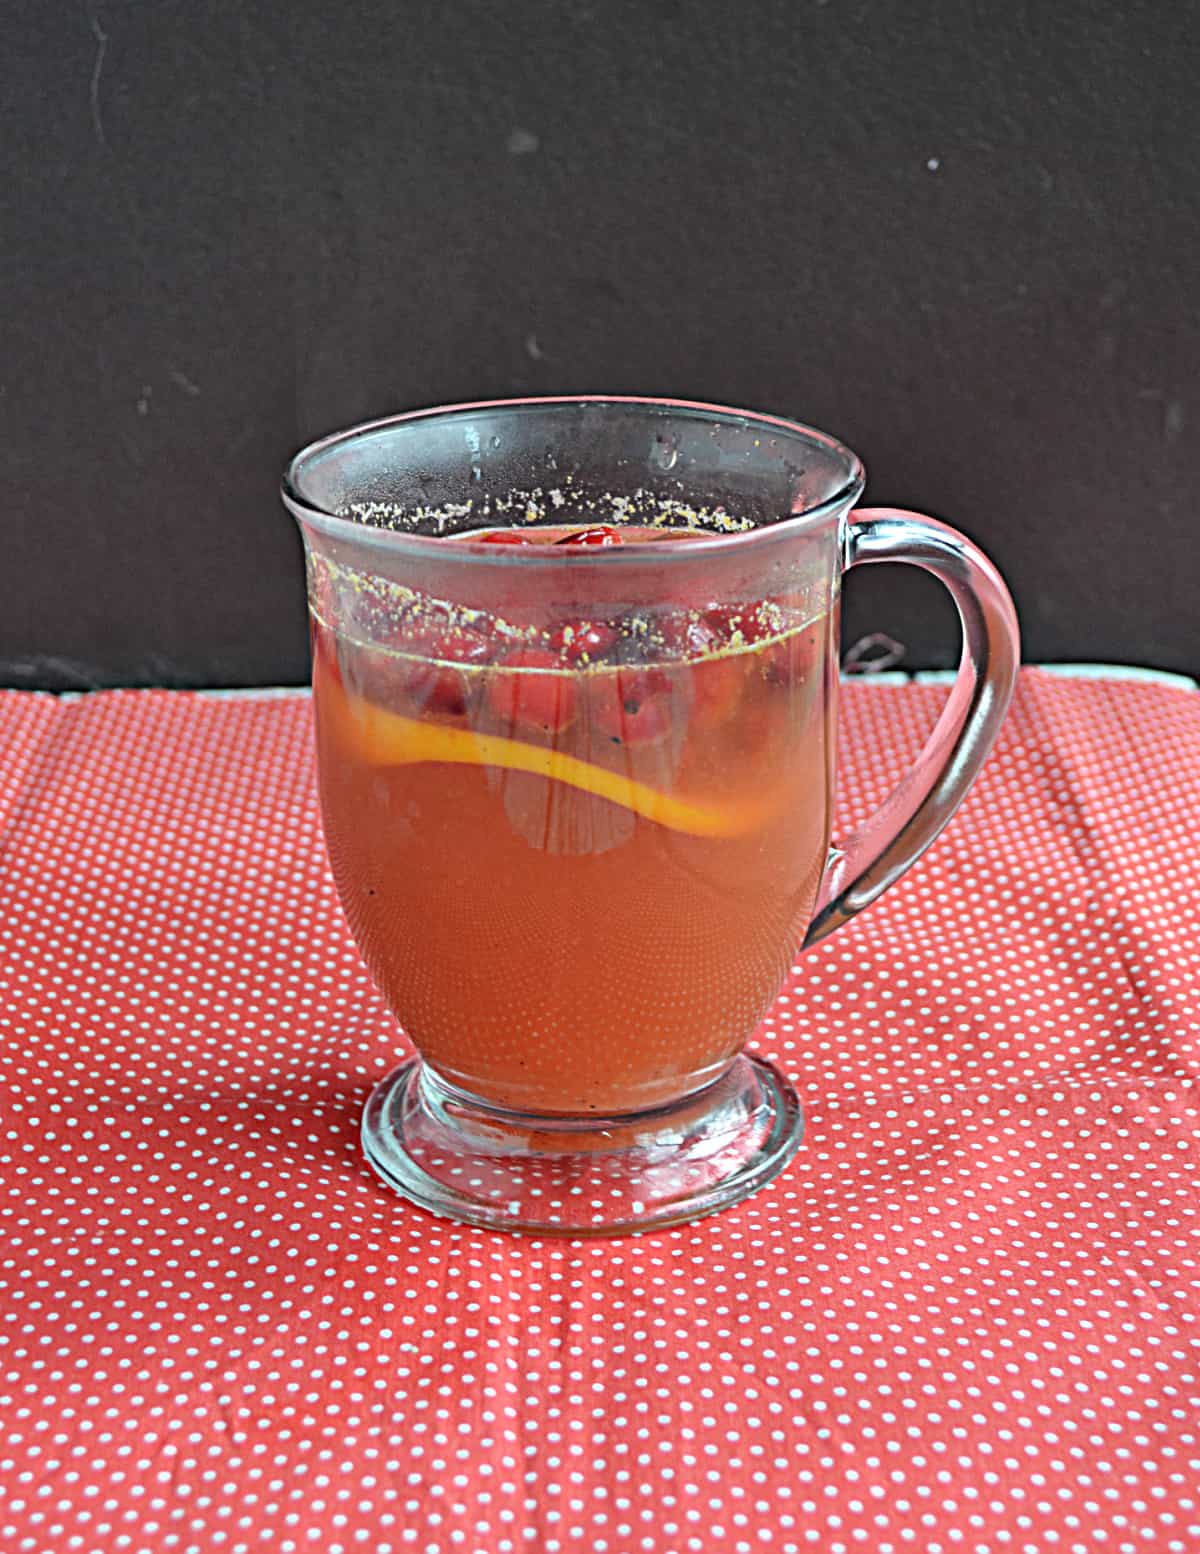 A mug of cider with orange slices in it.